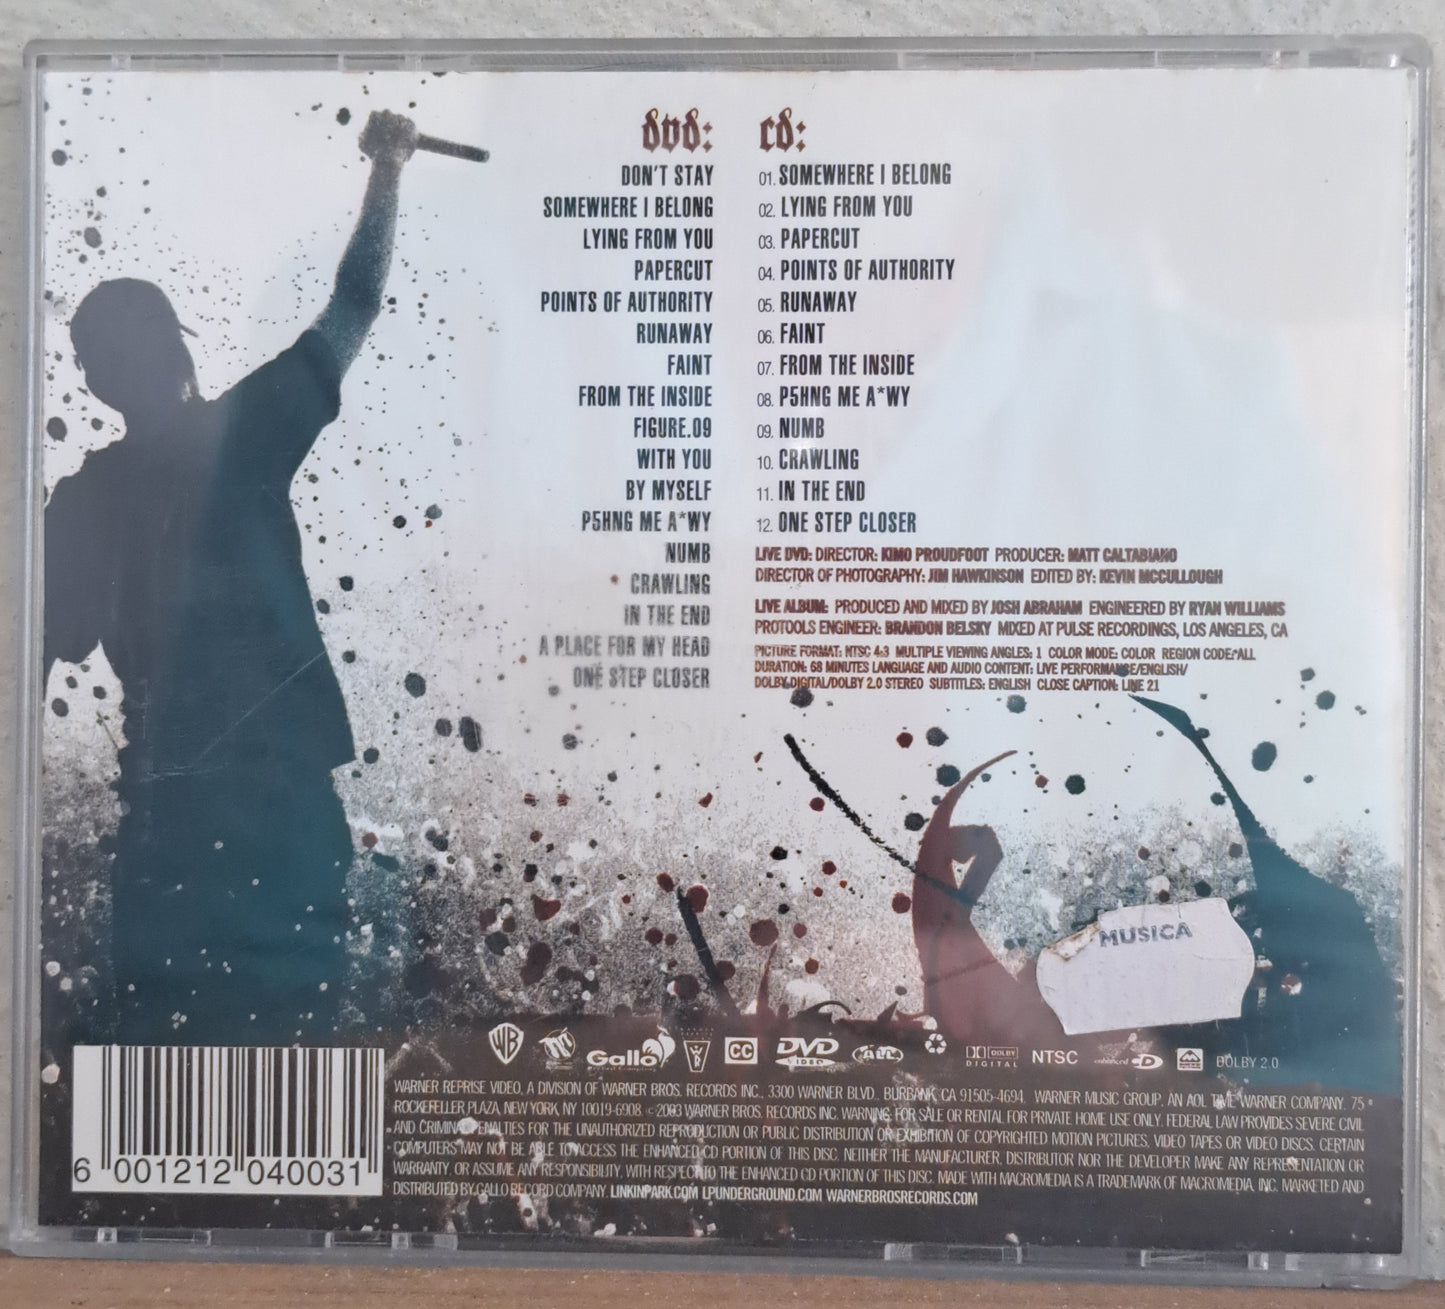 Linkin Park - Live in Texas (cd/dvd combo)